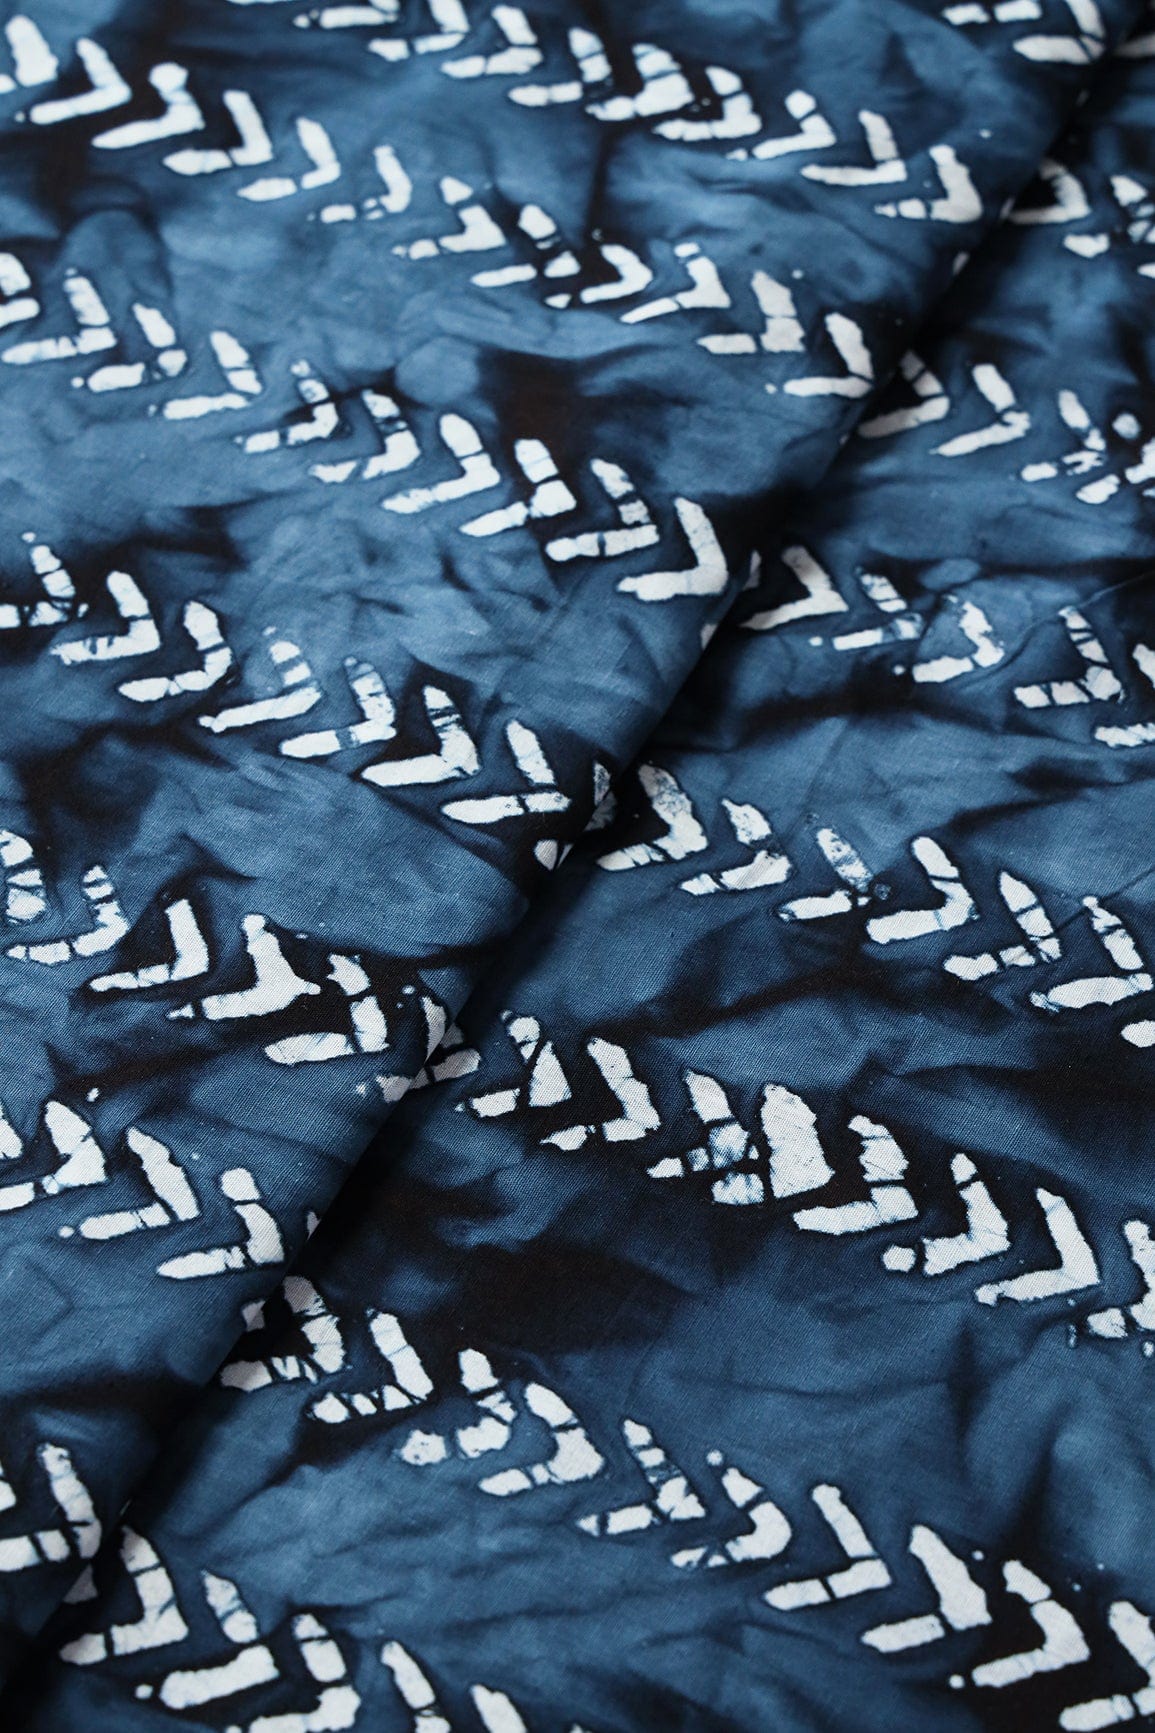 doeraa Prints White And Navy Blue Geometric Pattern Batik Handblock Organic Cotton Fabric